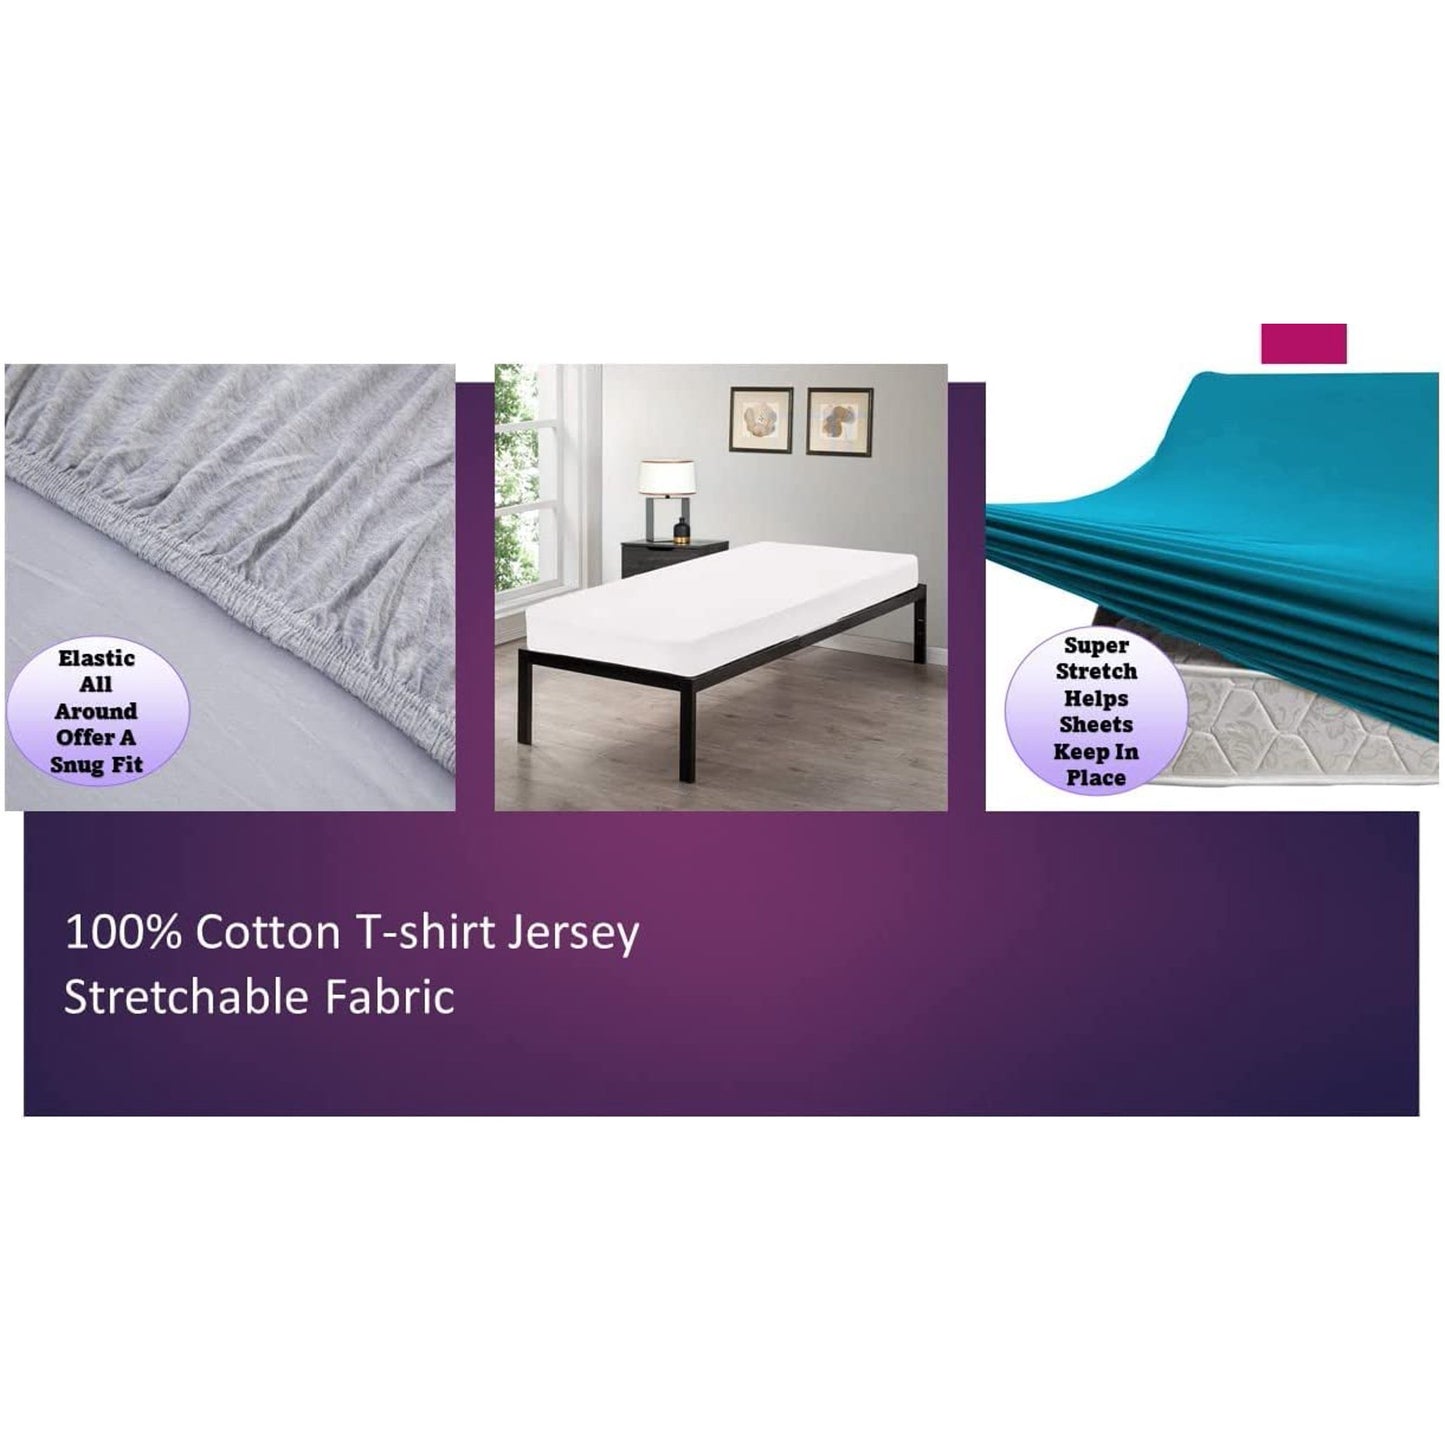 100% Combed T-Shirt Cotton Jersey Knit Camp Sheet Set, 1 Fitted cot Sheet, 1 Flat Sheet, 1 Standard Pillow case Lavender…